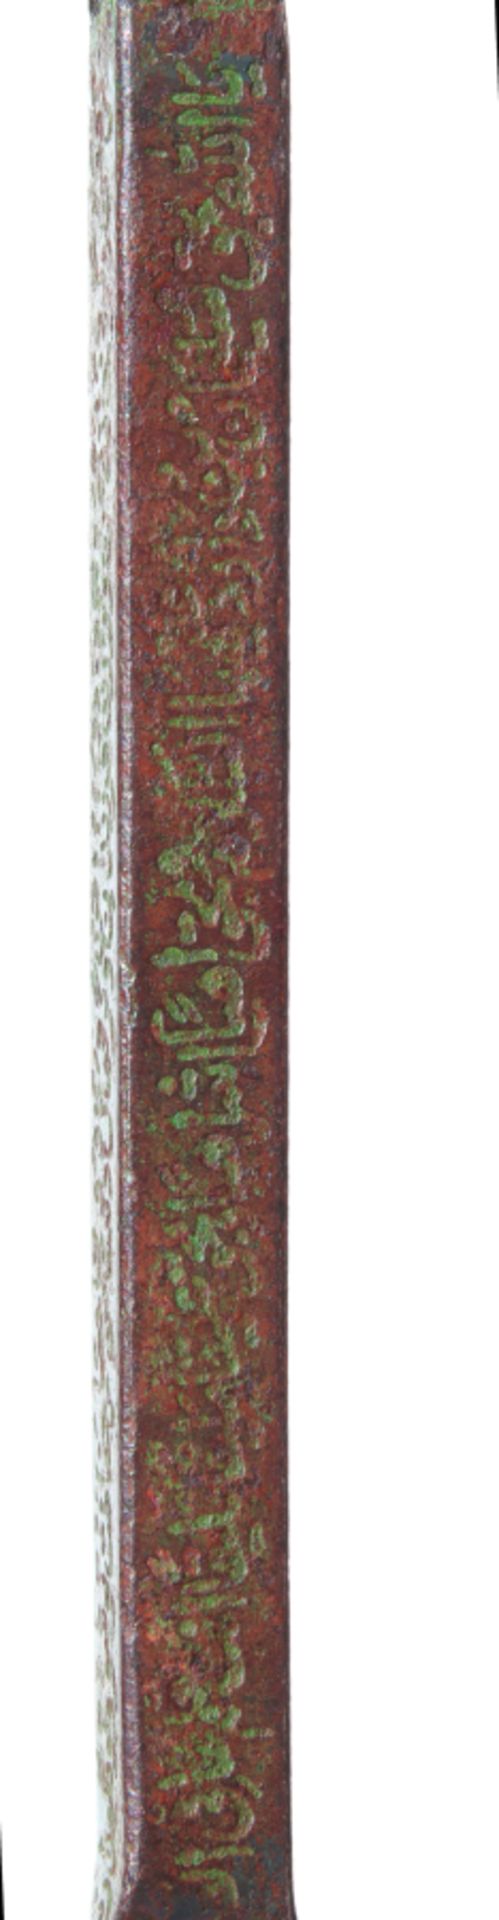 Seljuk bronze talismanic  tool with Quranic inscriptions, 6th century AH (12th century AD) - Image 8 of 12